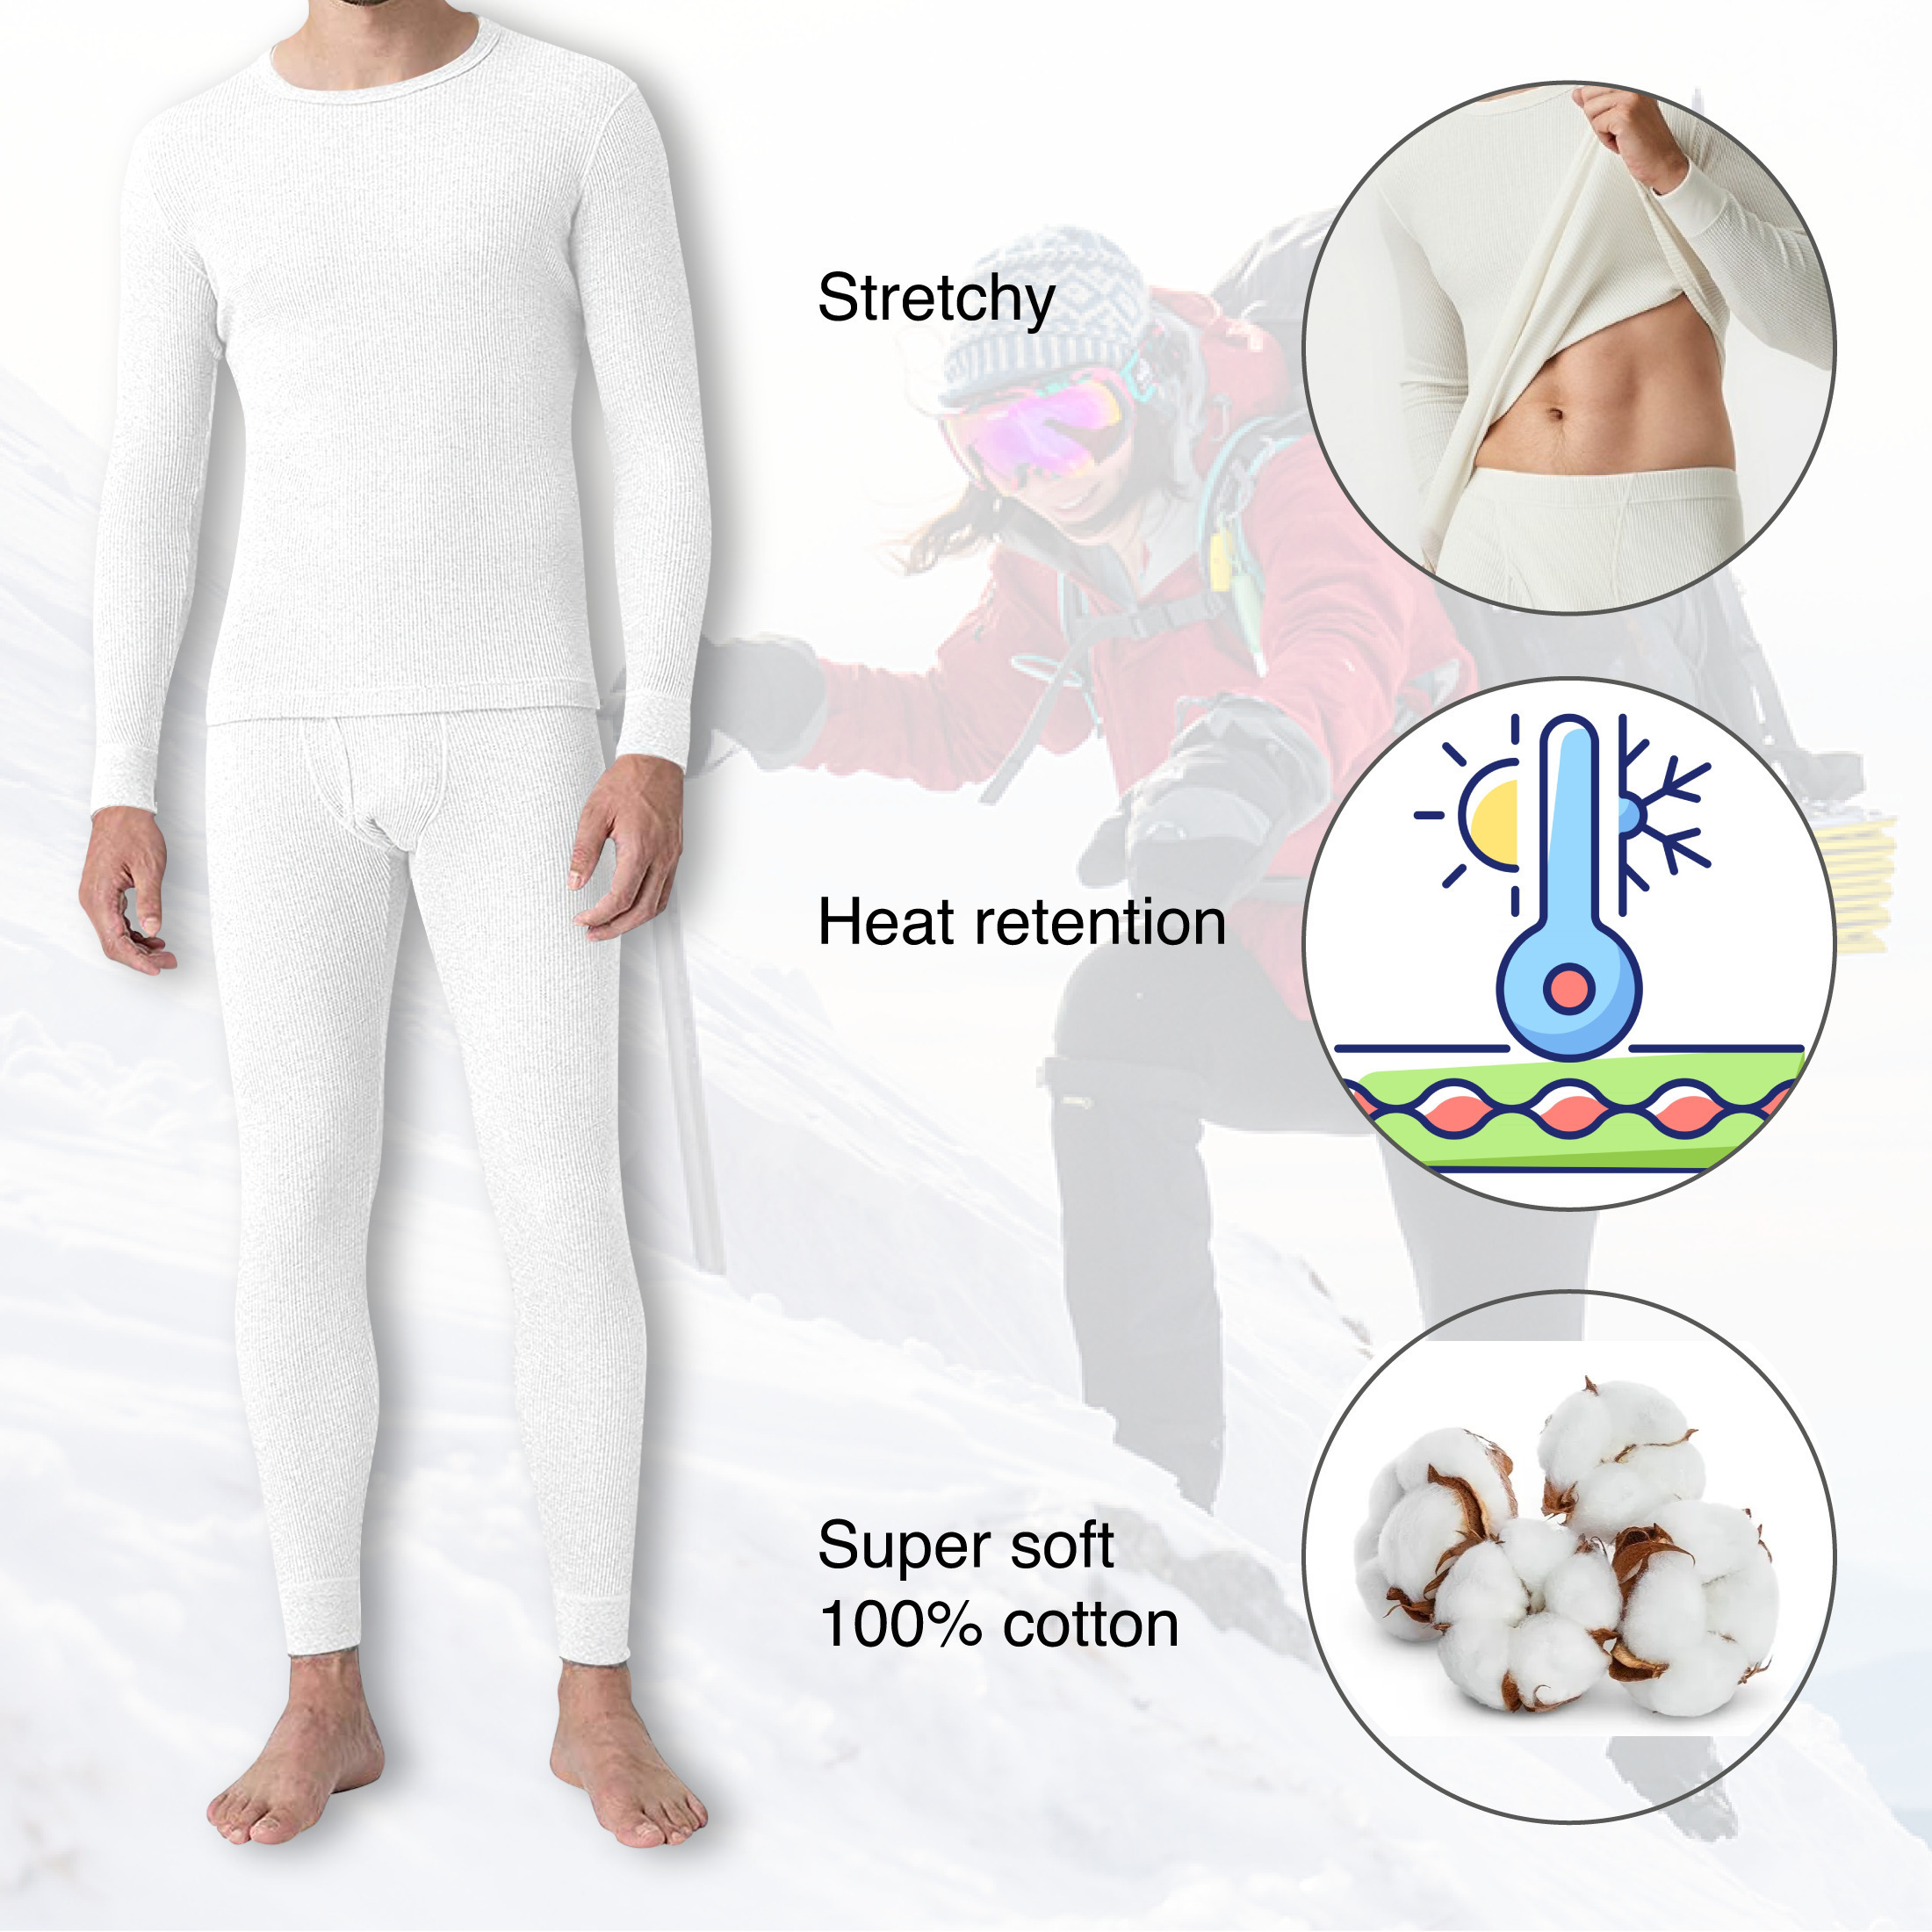 2-Sets: Men's Super Soft Cotton Waffle Knit Winter Thermal Underwear Set - Grey & White, Large